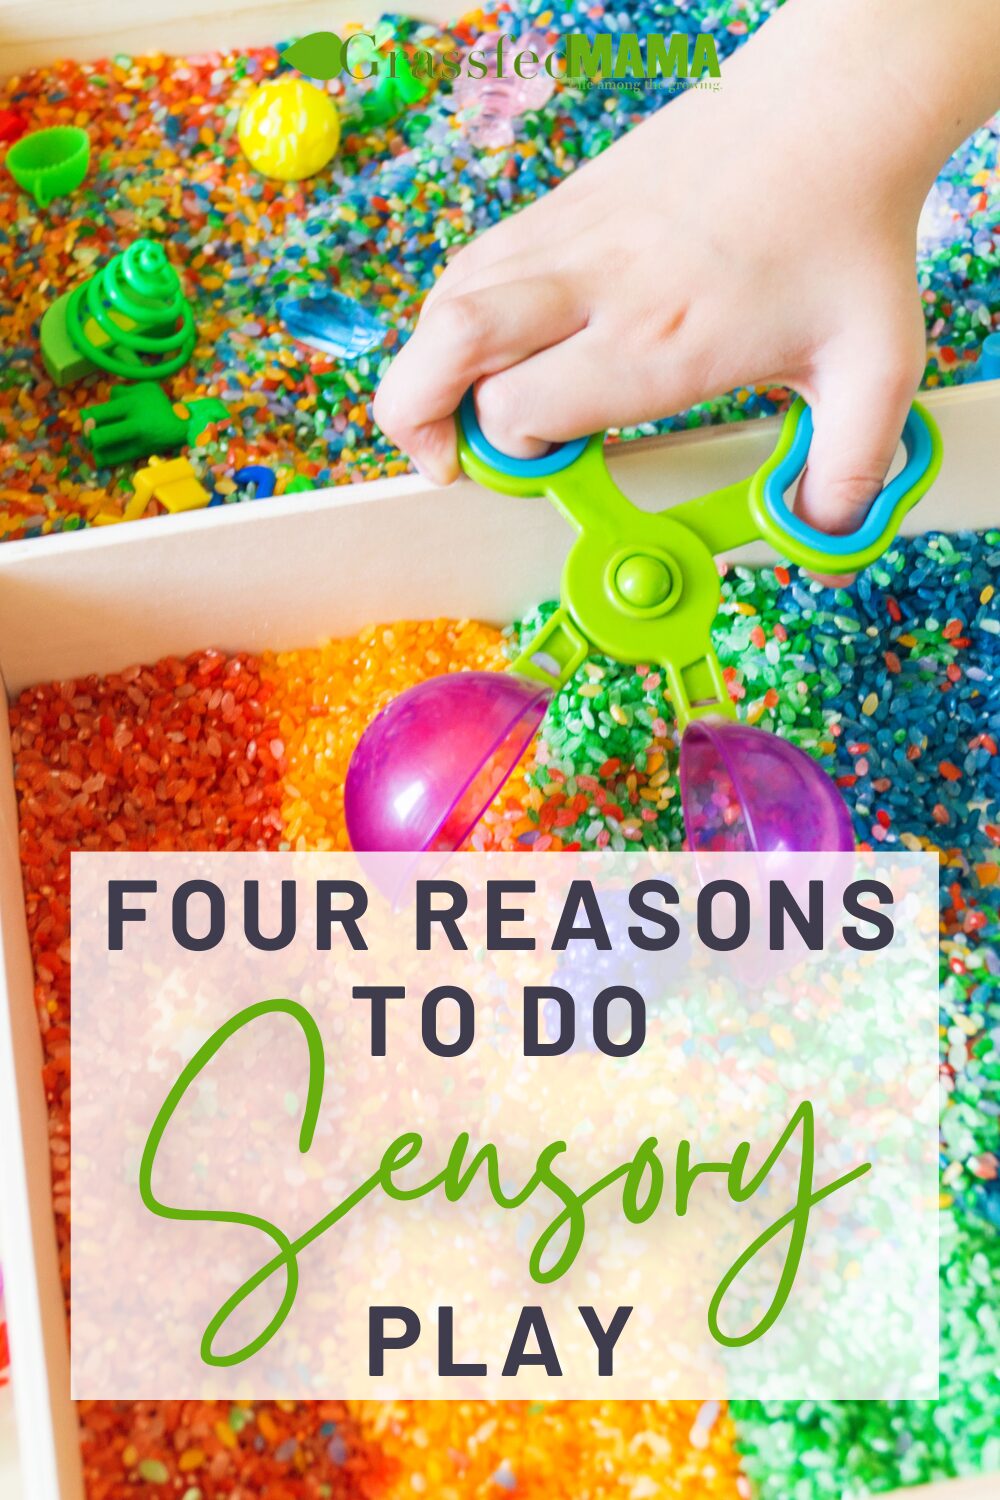 Four Reasons to do Sensory Play